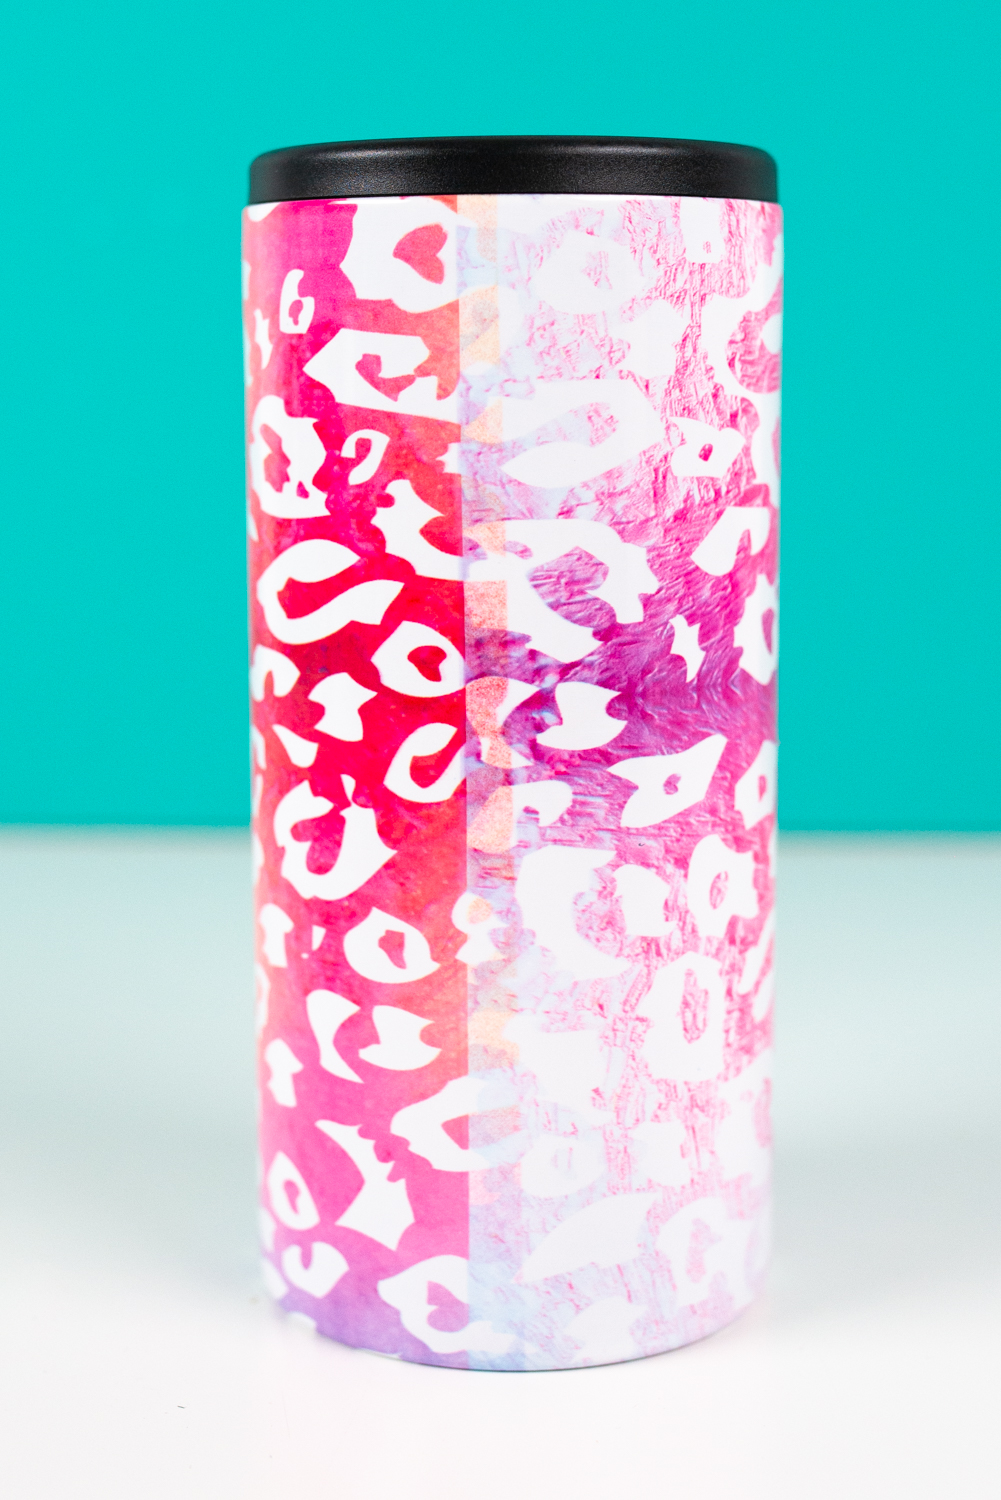 Leopard print sublimation tumbler showing color bleed through